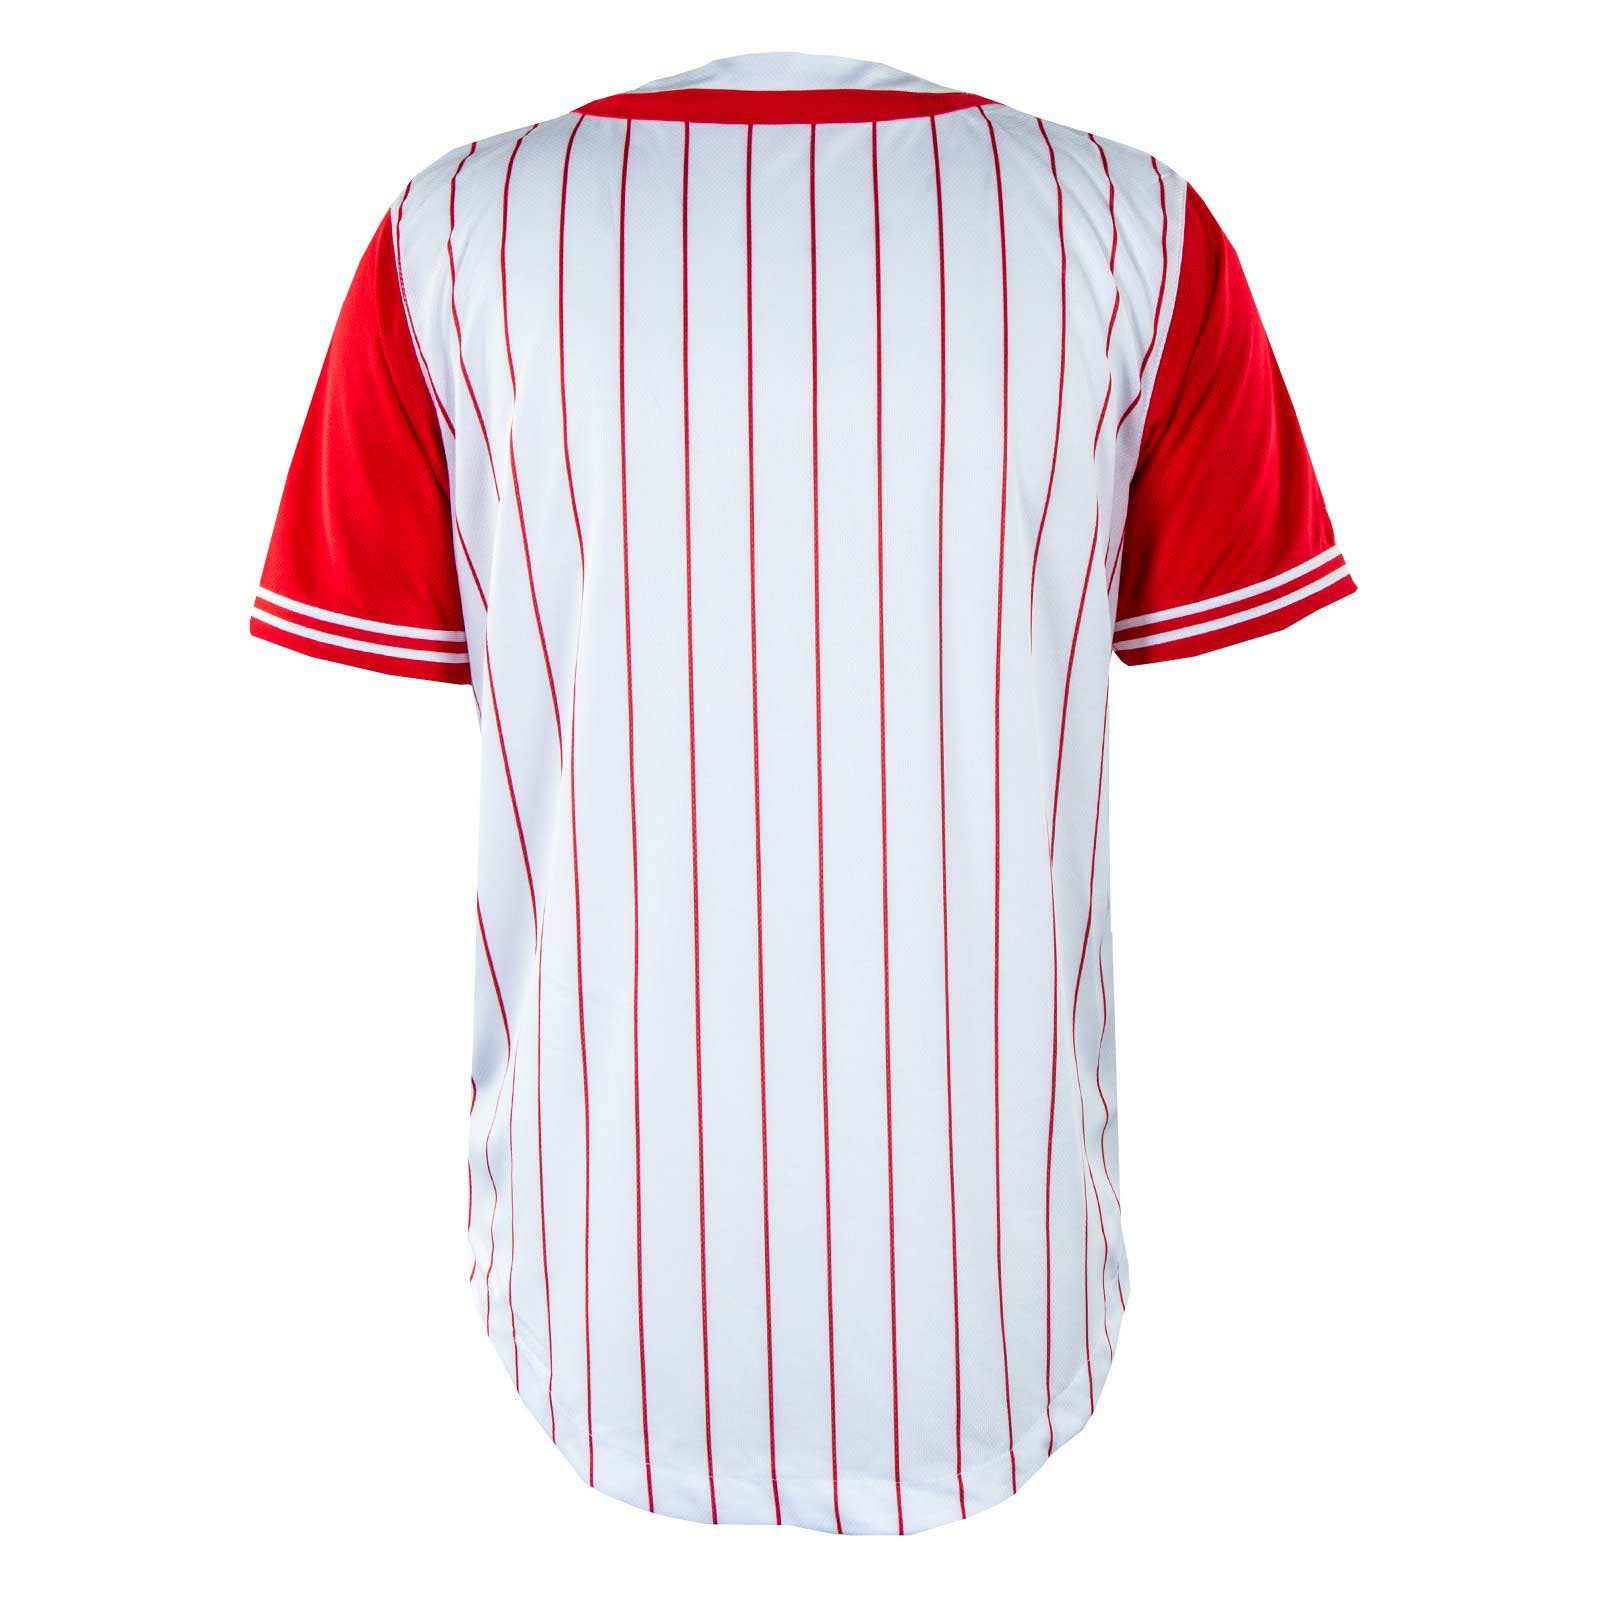 Baseball Karl Varsity Block Pinstripe Kani T-Shirt